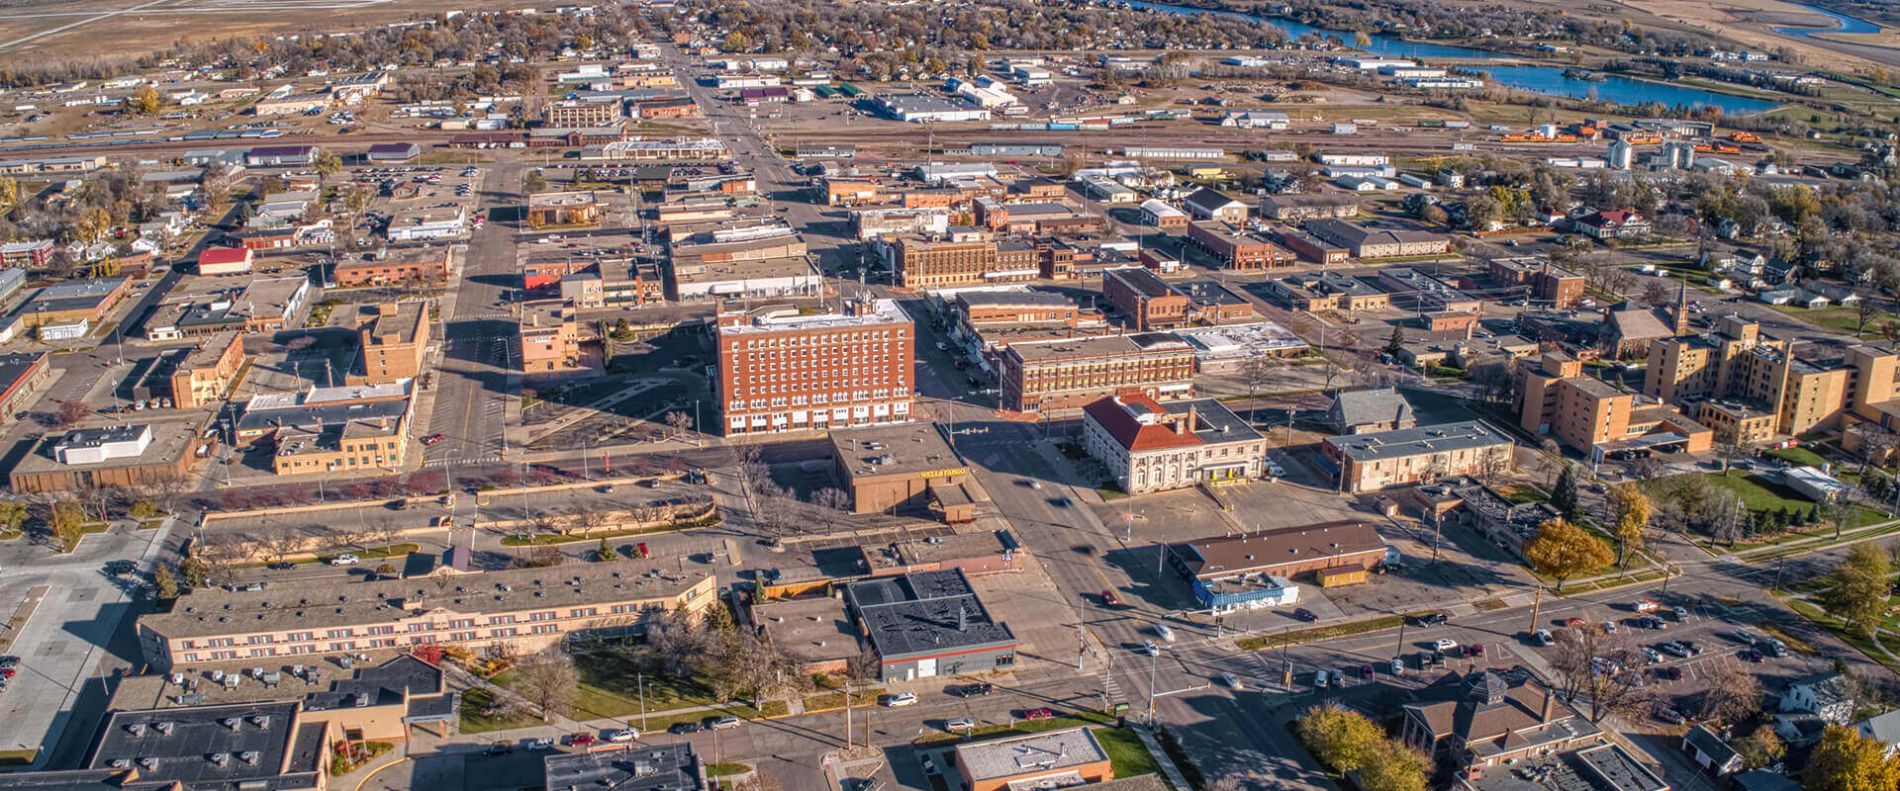 Aerial photo of Huron, SD - Photo by Travel South Dakota.